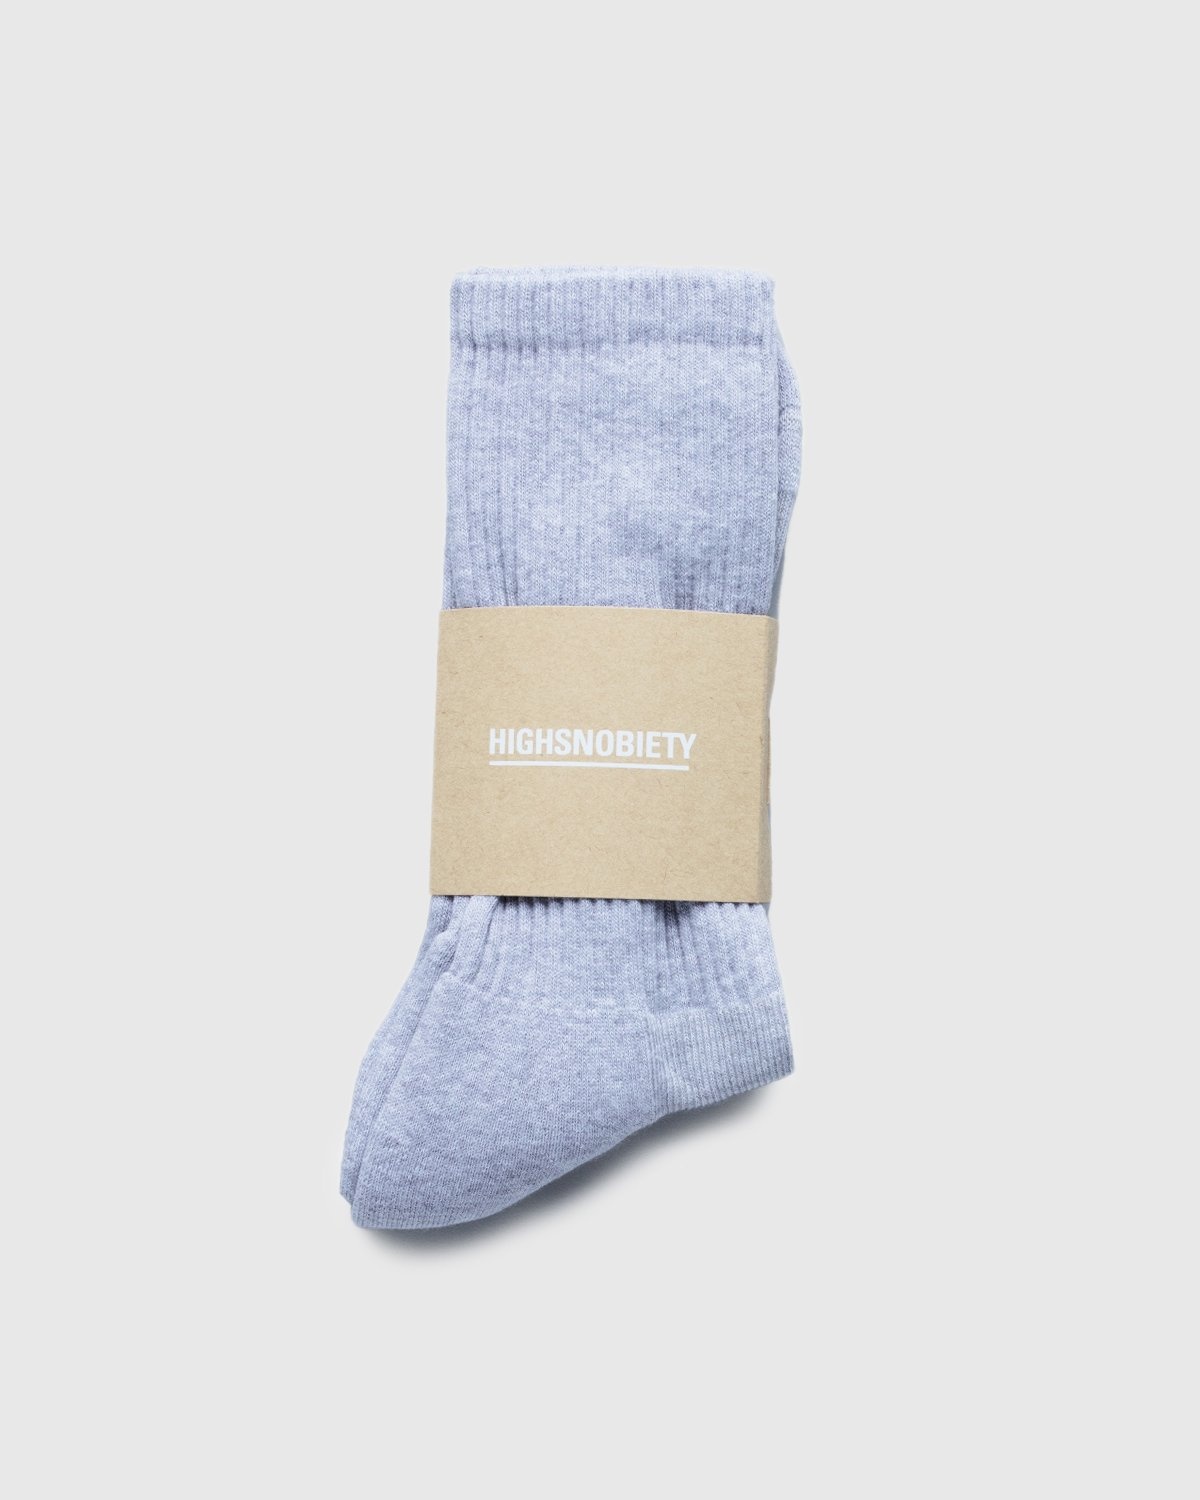 Highsnobiety – Socks Grey - Crew - Grey - Image 2